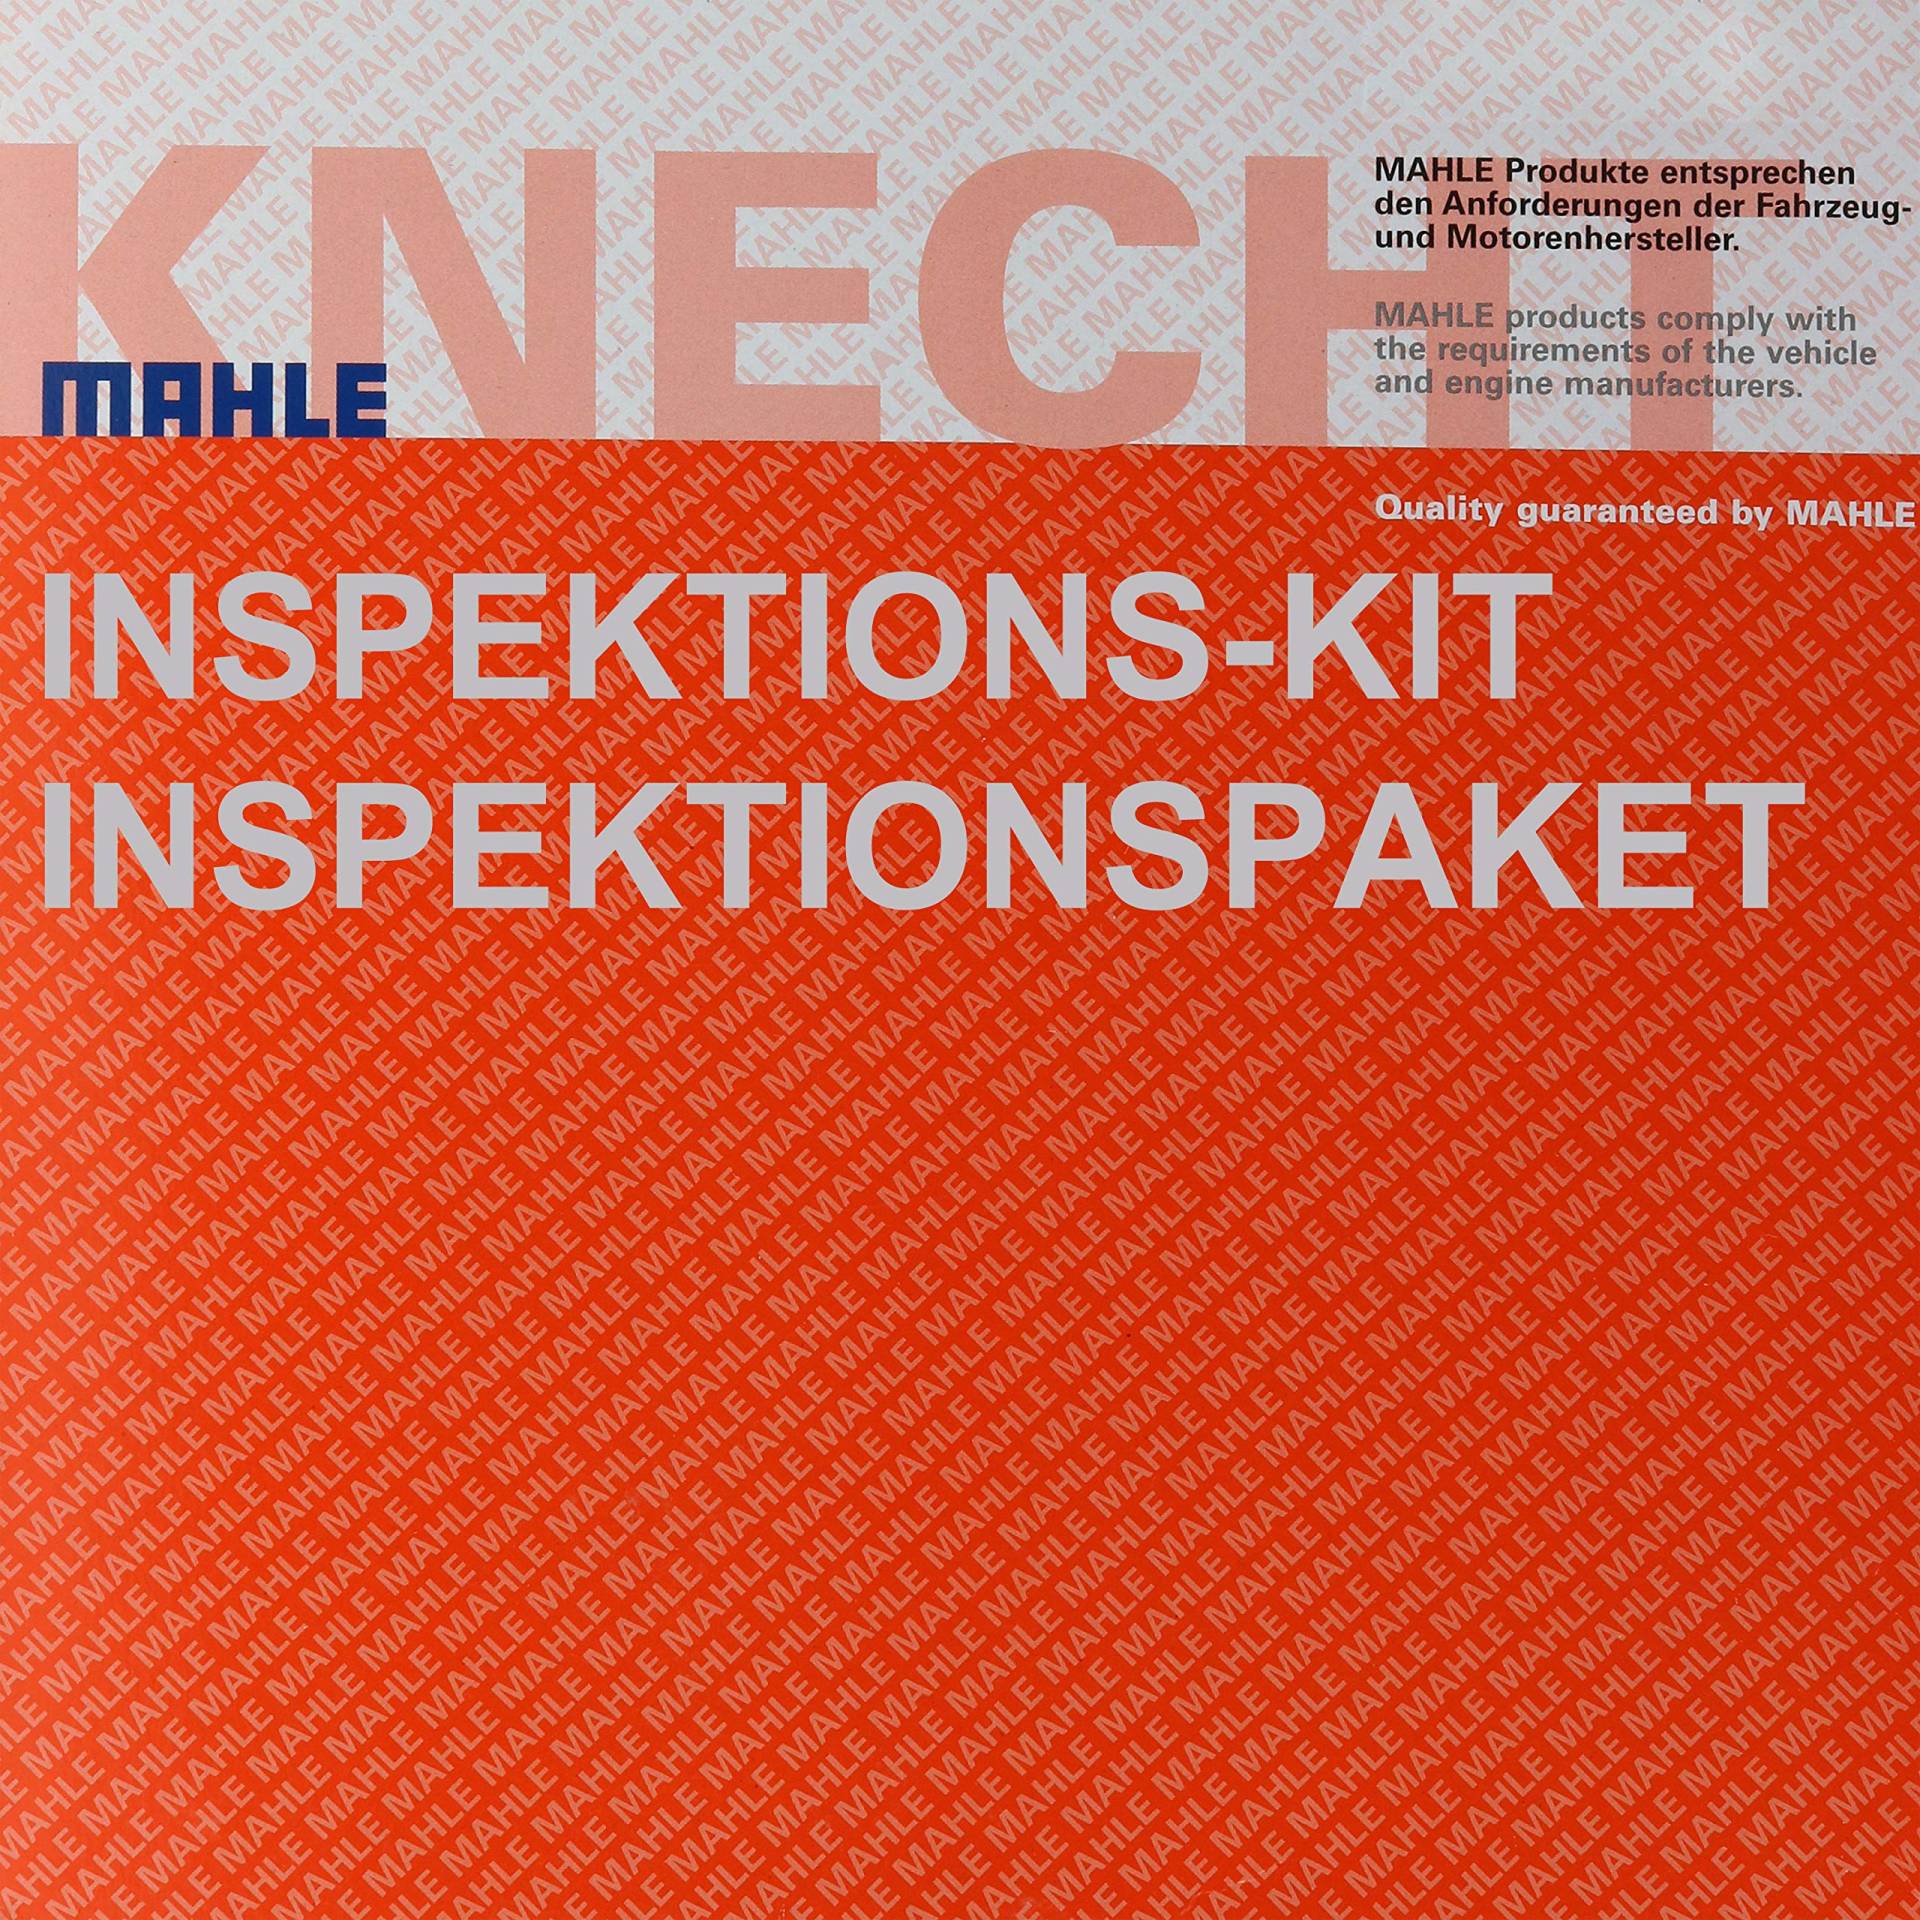 MAHLE Inspektions Set Inspektionspaket Innenraumfilter Kraftstofffilter Luftfilter Ölfilter von Diederichs